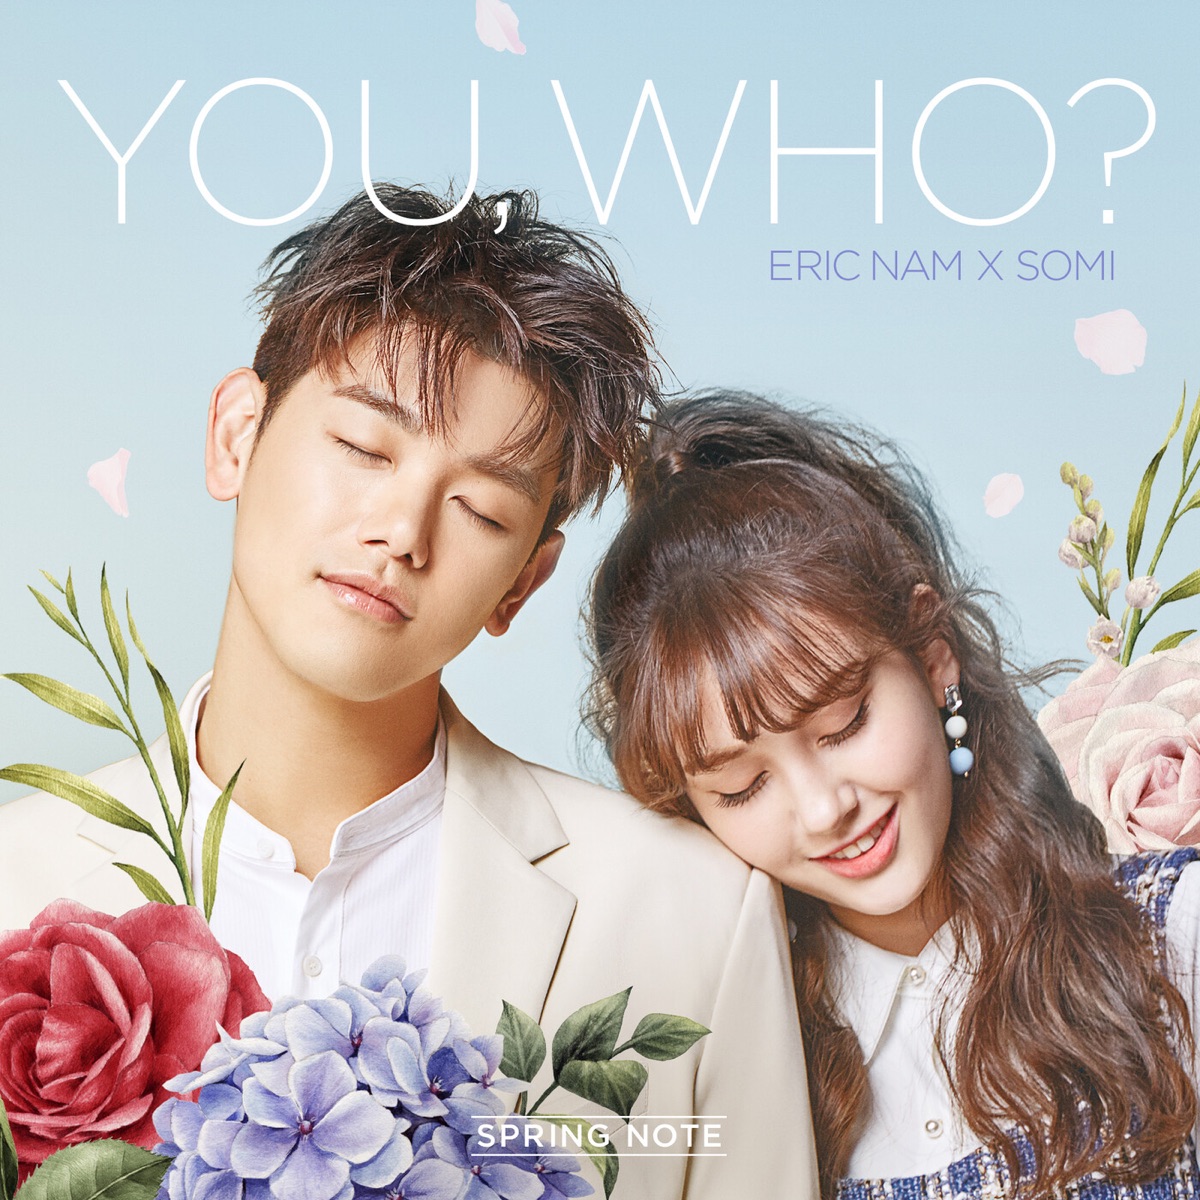 Eric Nam, SOMI – You, Who? – Single